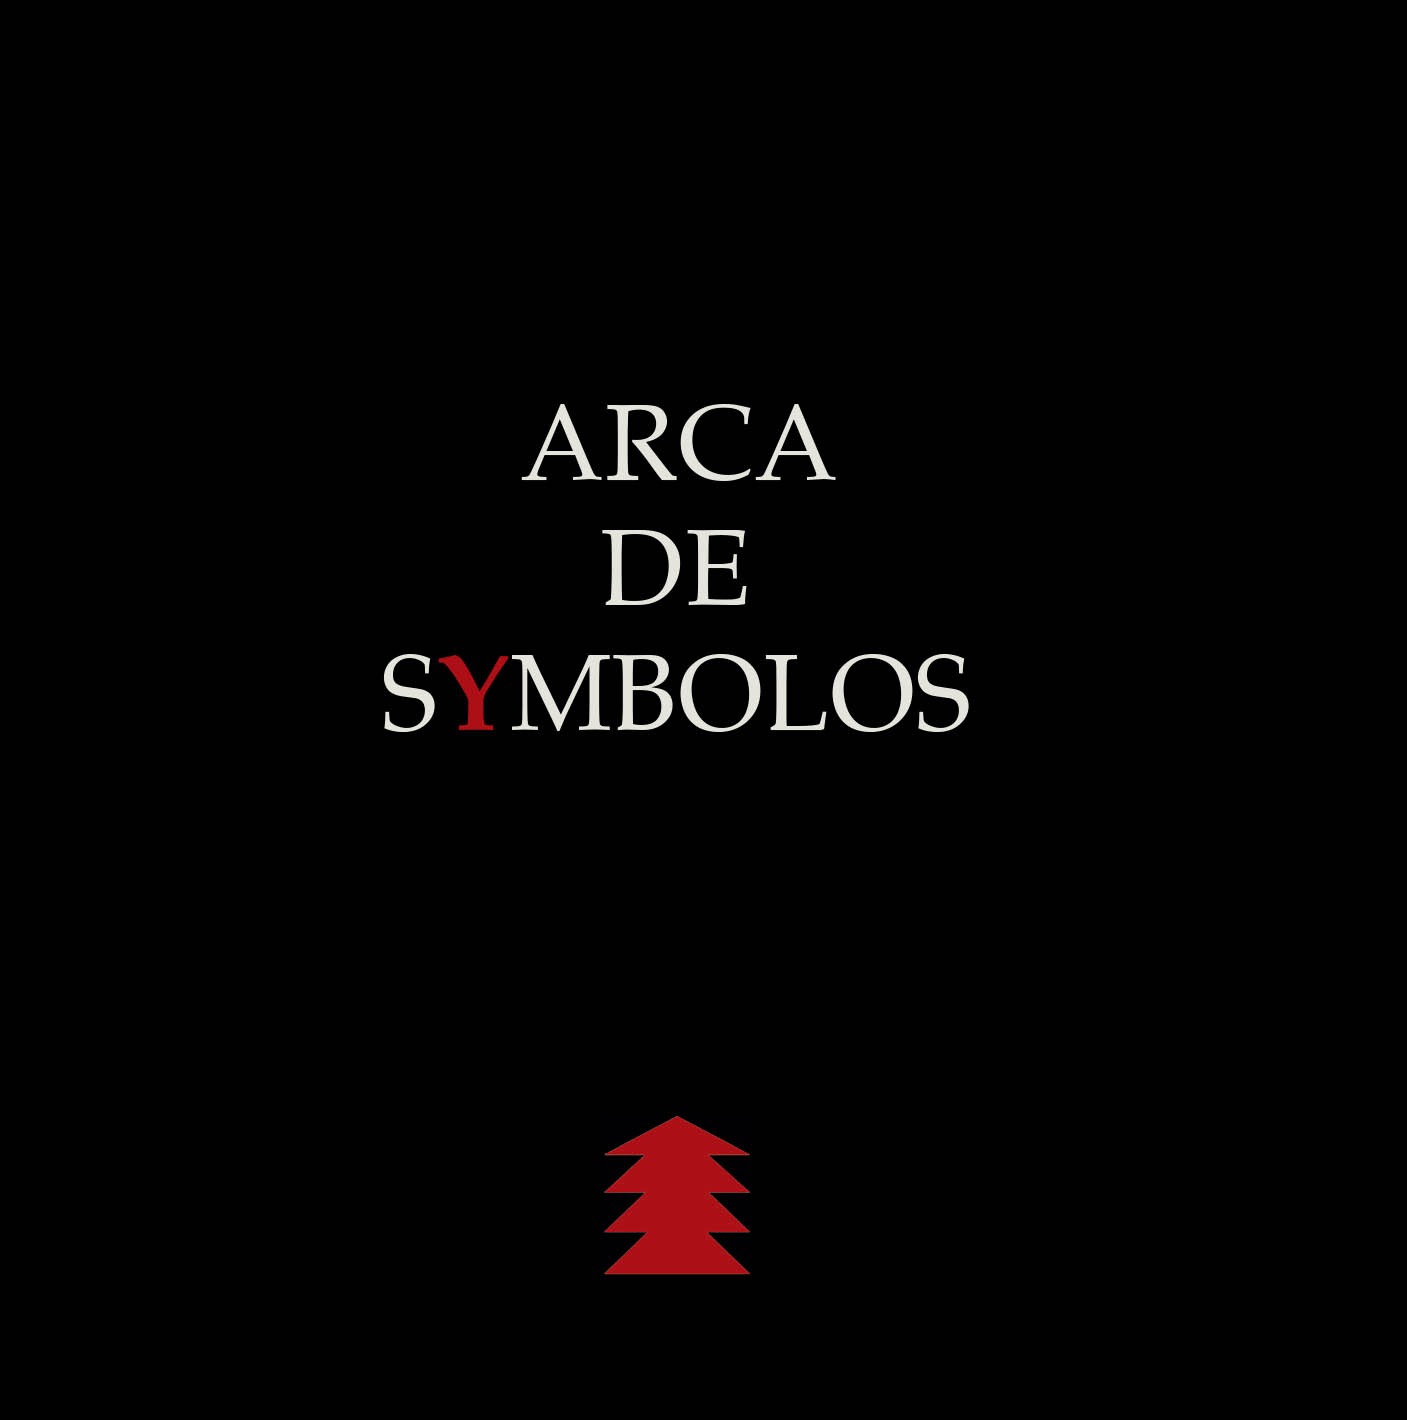 Pedro Angosto reseña Arca de Symbolos